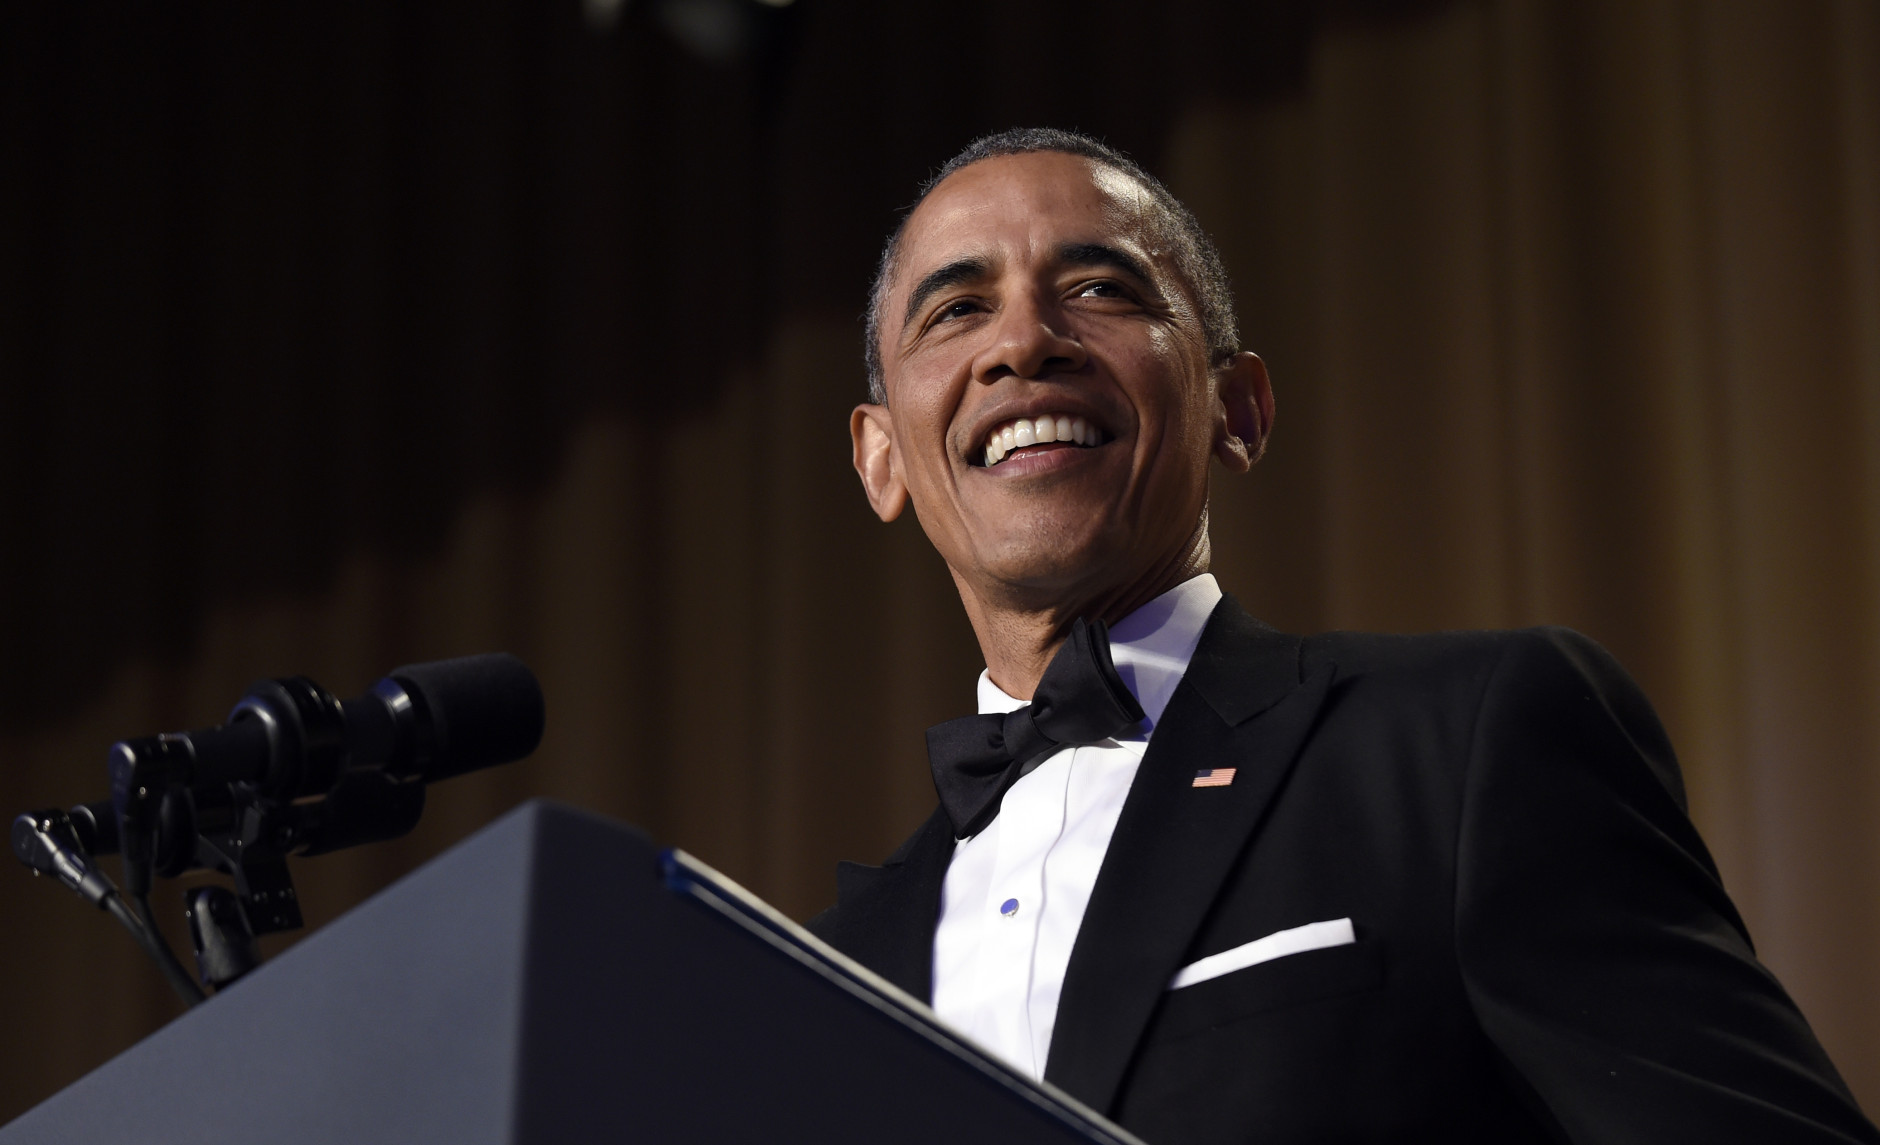 President Barack Obama speaks at the annual White House Correspondents' Association dinner at the Washington Hilton in Washington, Saturday, April 30, 2016. (AP Photo/Susan Walsh)